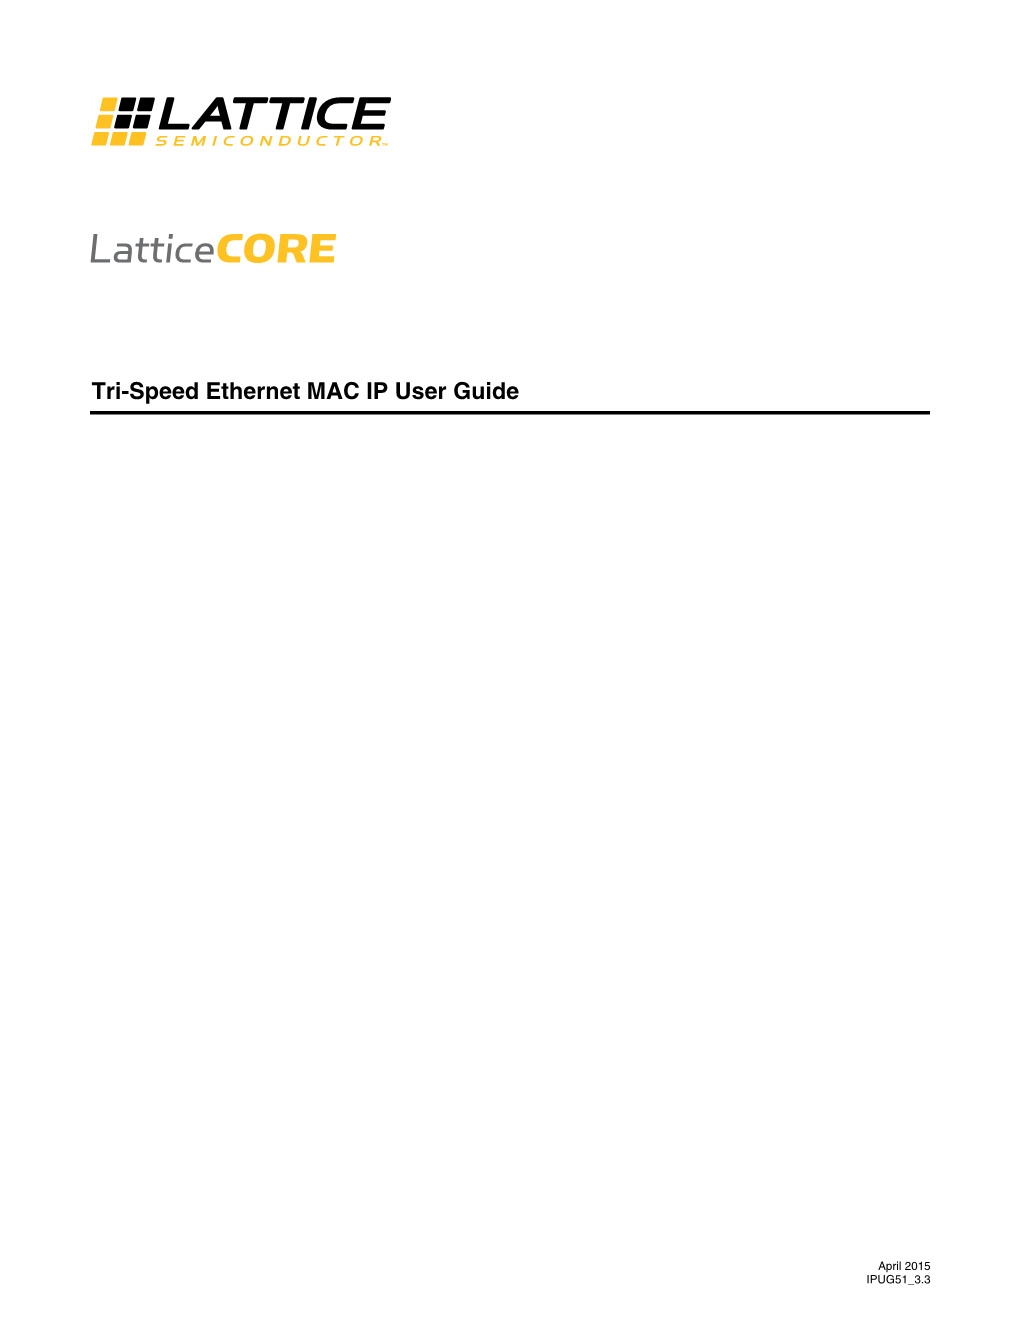 Tri-Speed Ethernet MAC IP Core User Guide